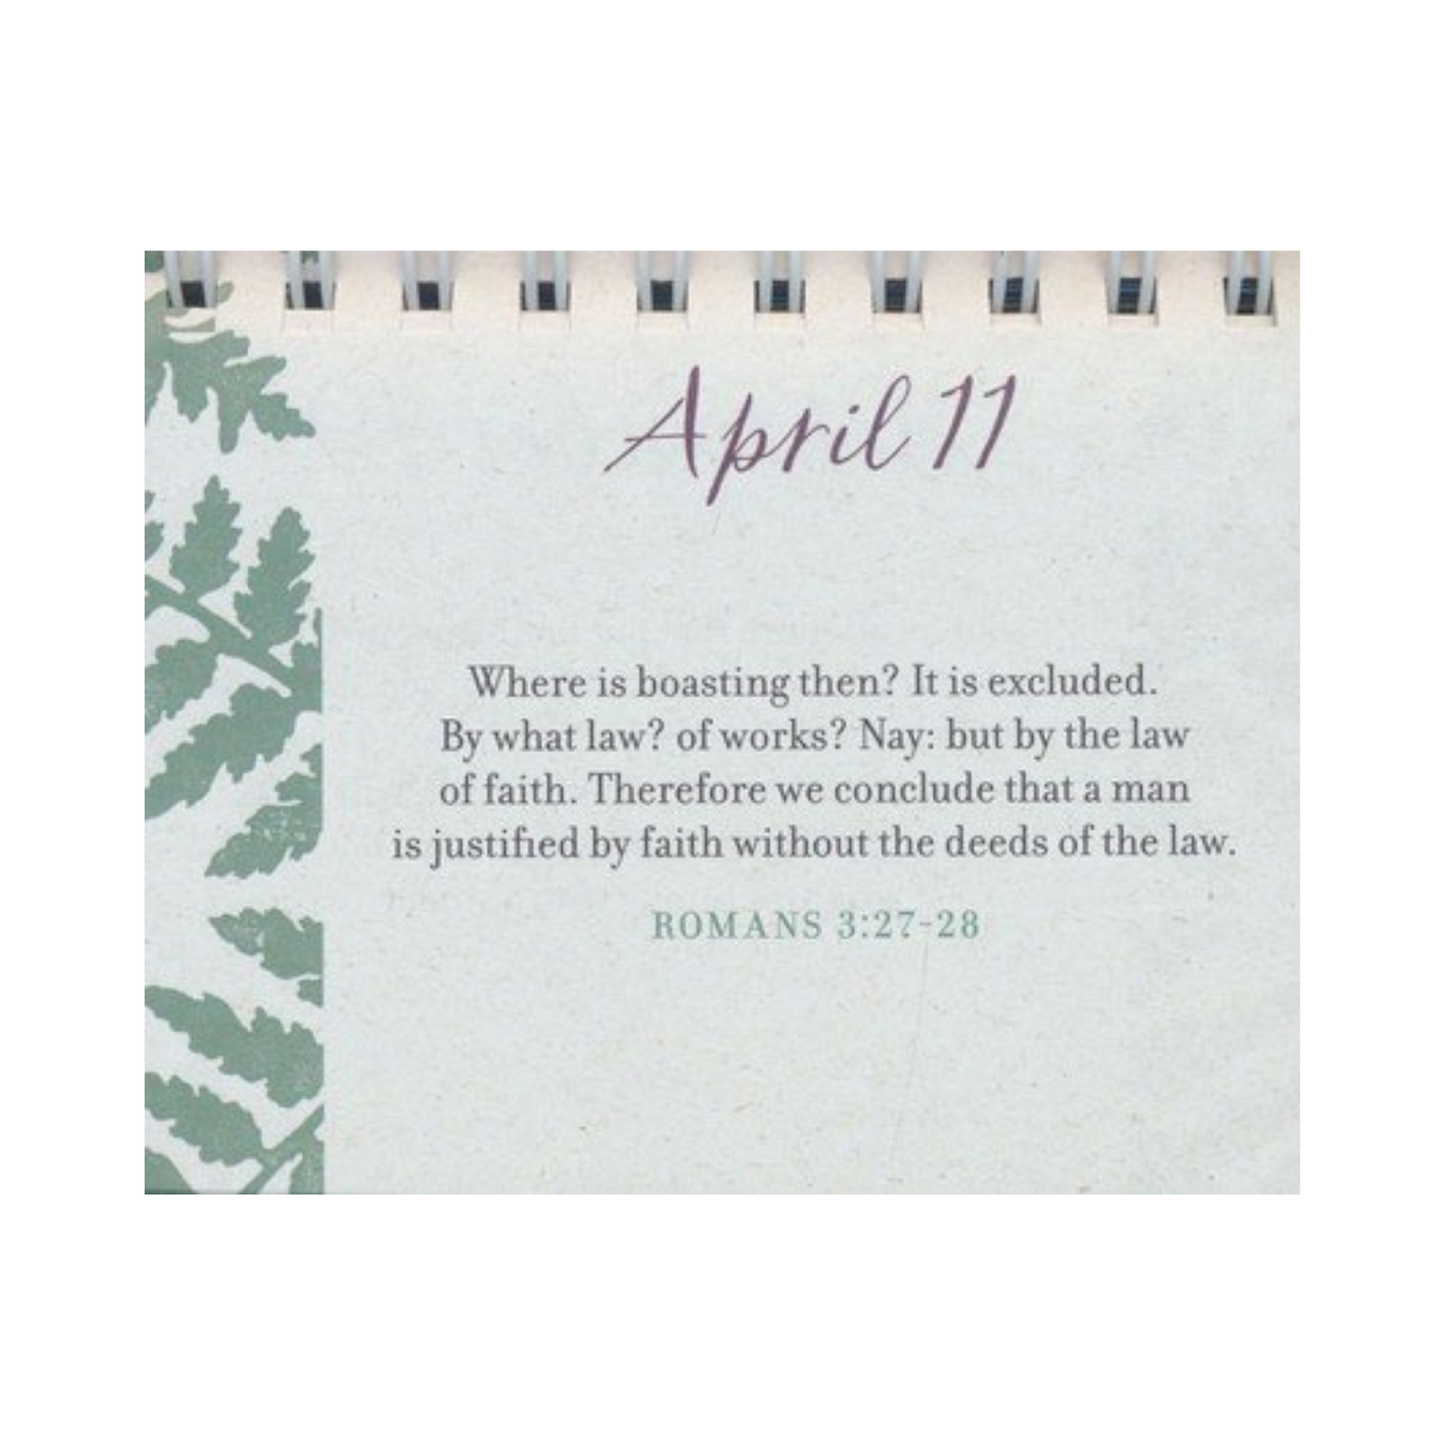 Perpetual Calendar - Promises & Blessings (#J4910)